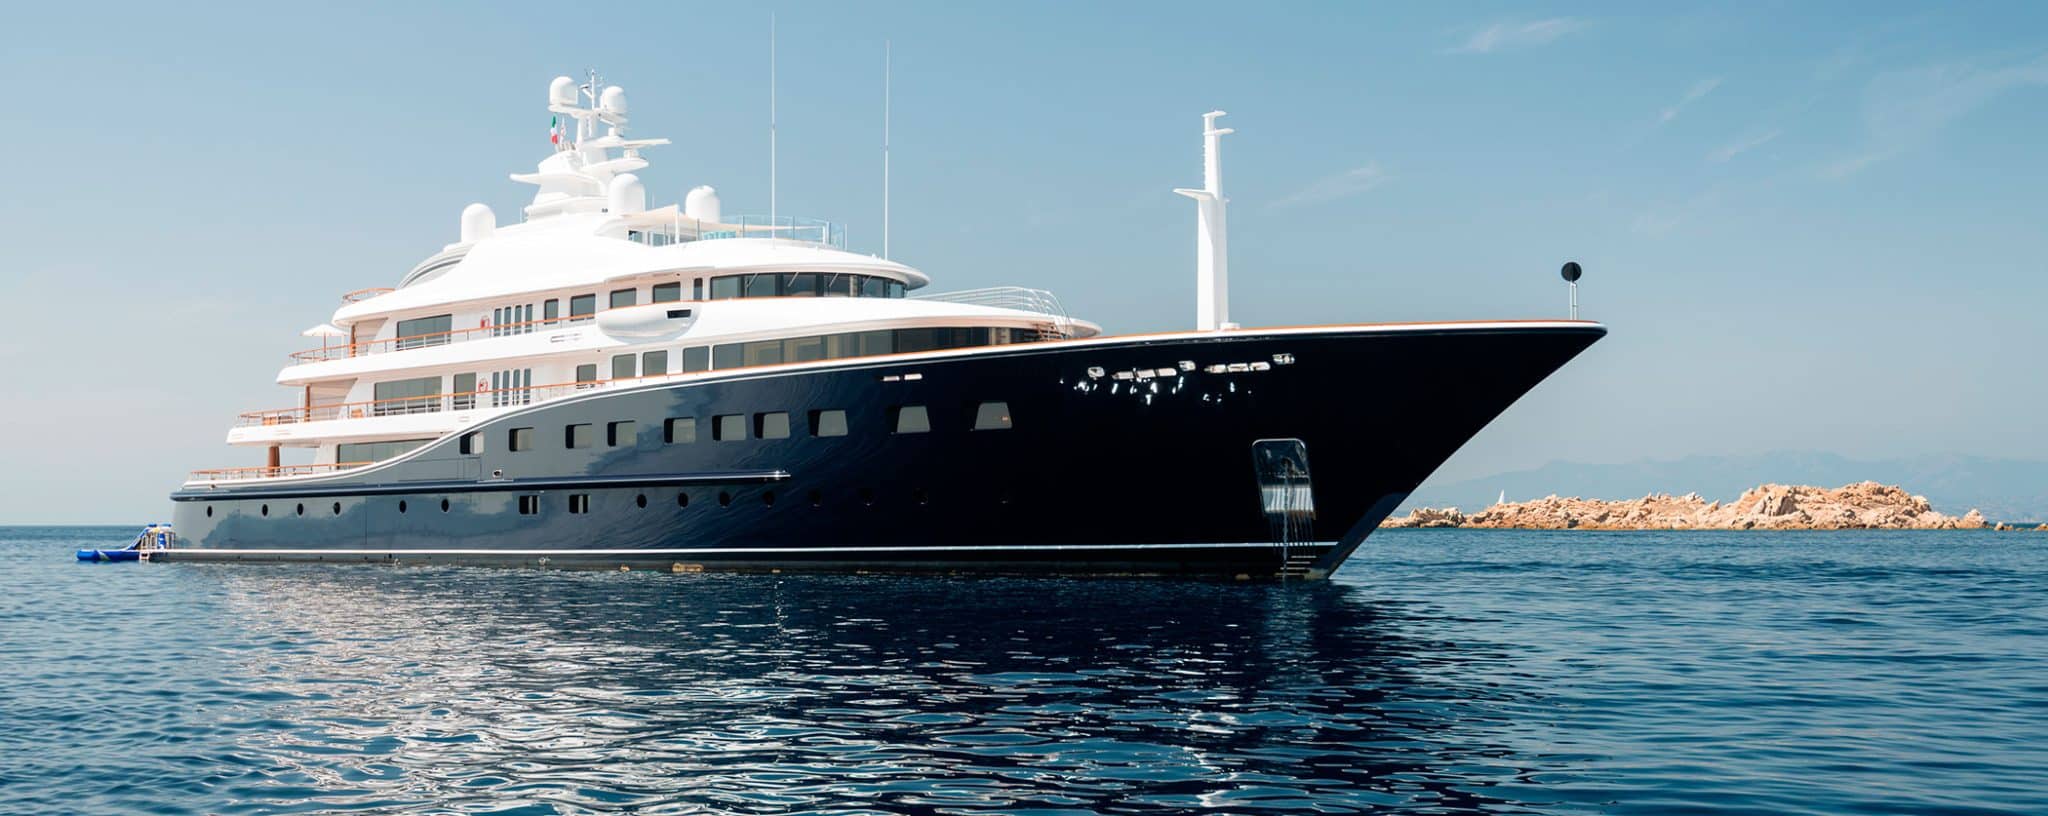 Florida Yachts International - Yacht Broker, Dealer, Consultant